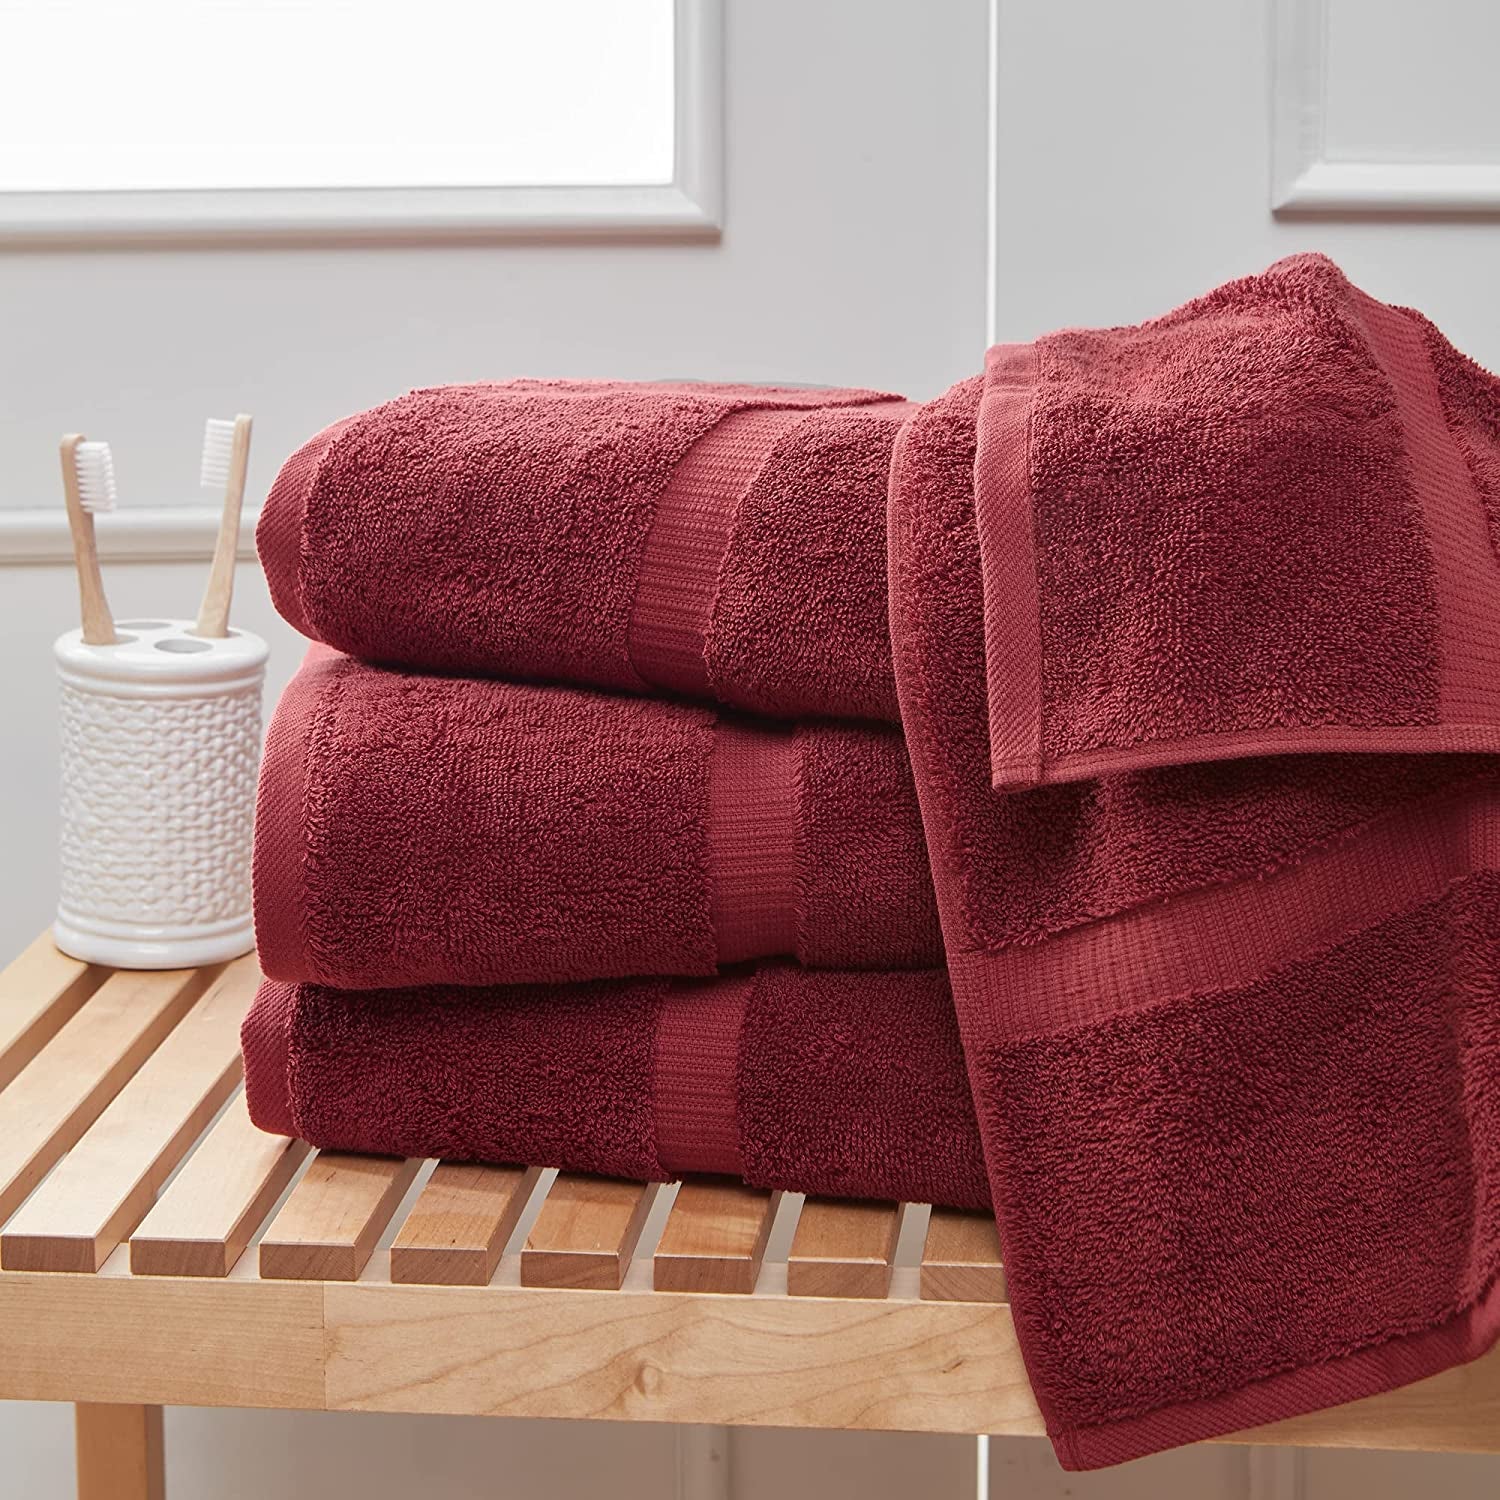 Premium Turkish Cotton Super Soft and Absorbent Towels (4-Piece Bath Towels, Cranberry)